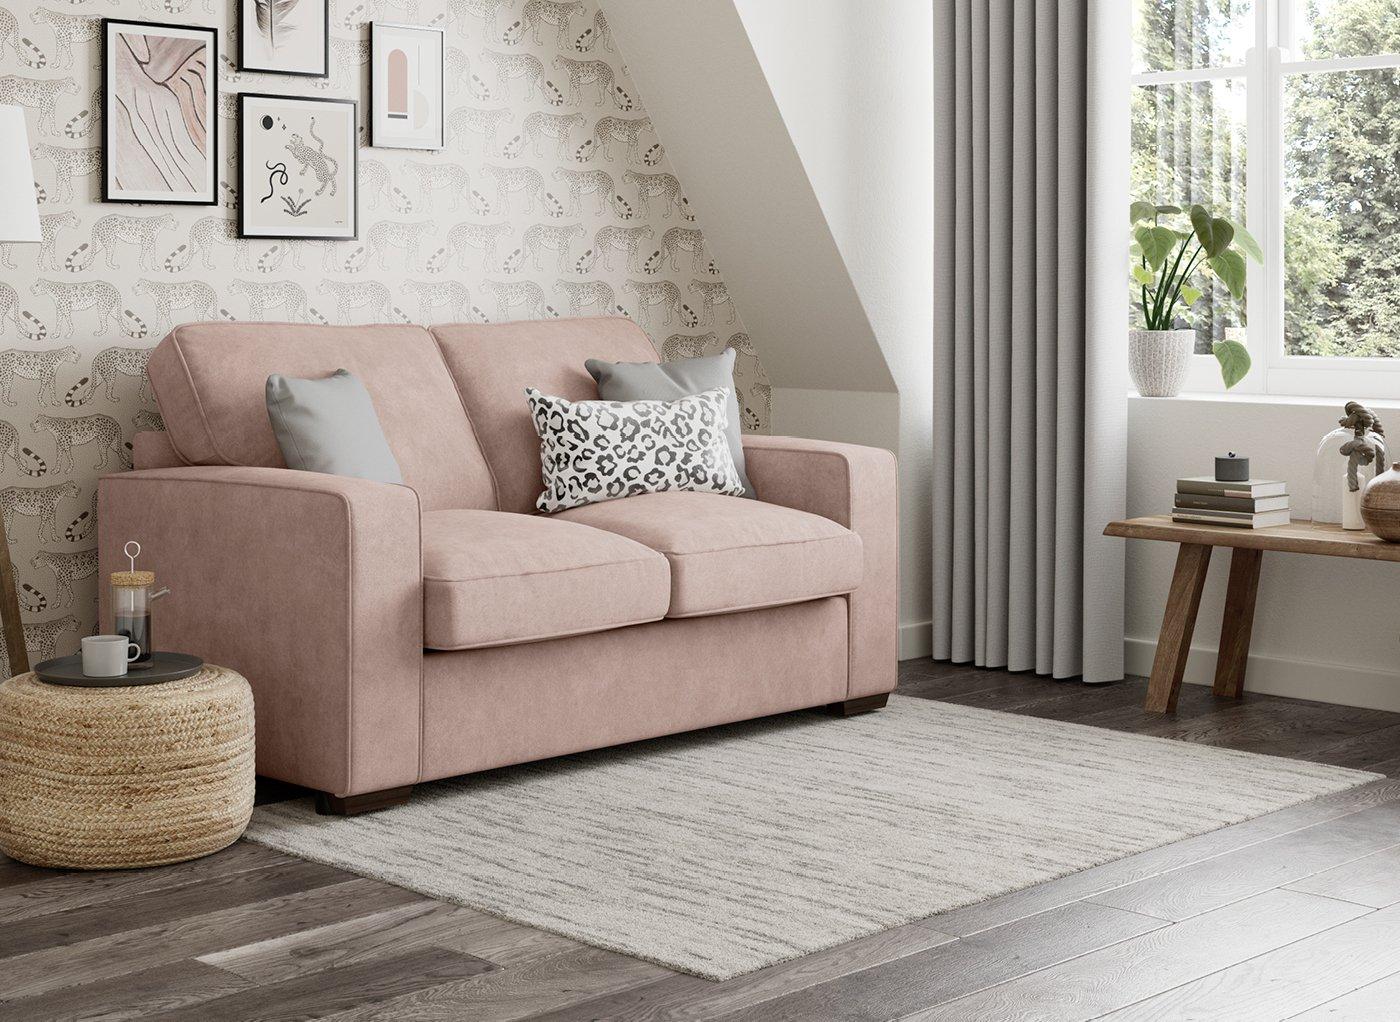 pink sofa bed amazon